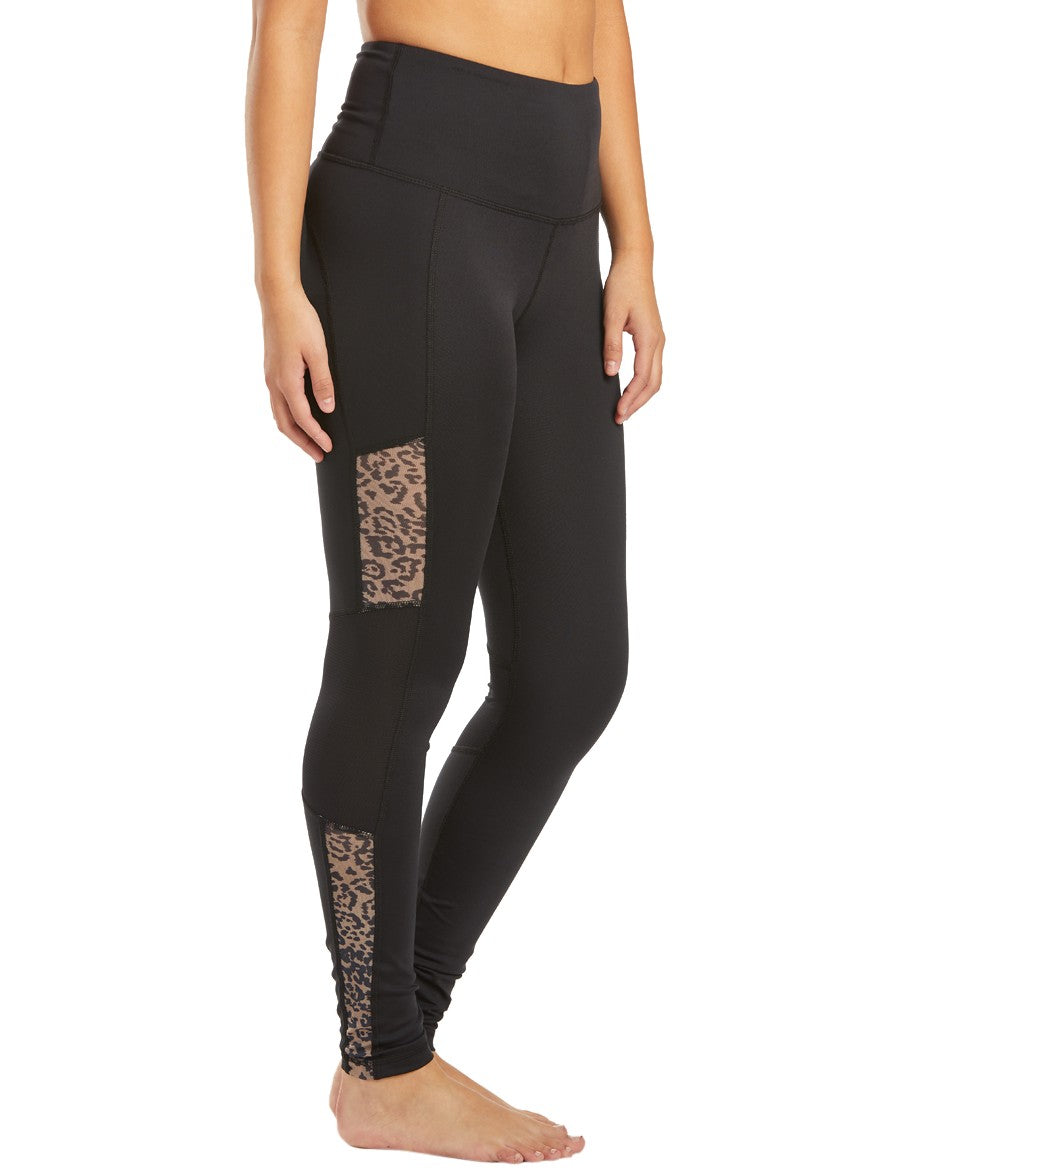 Marika Women's High Waisted Yoga Leggings - Black Cheetah Print